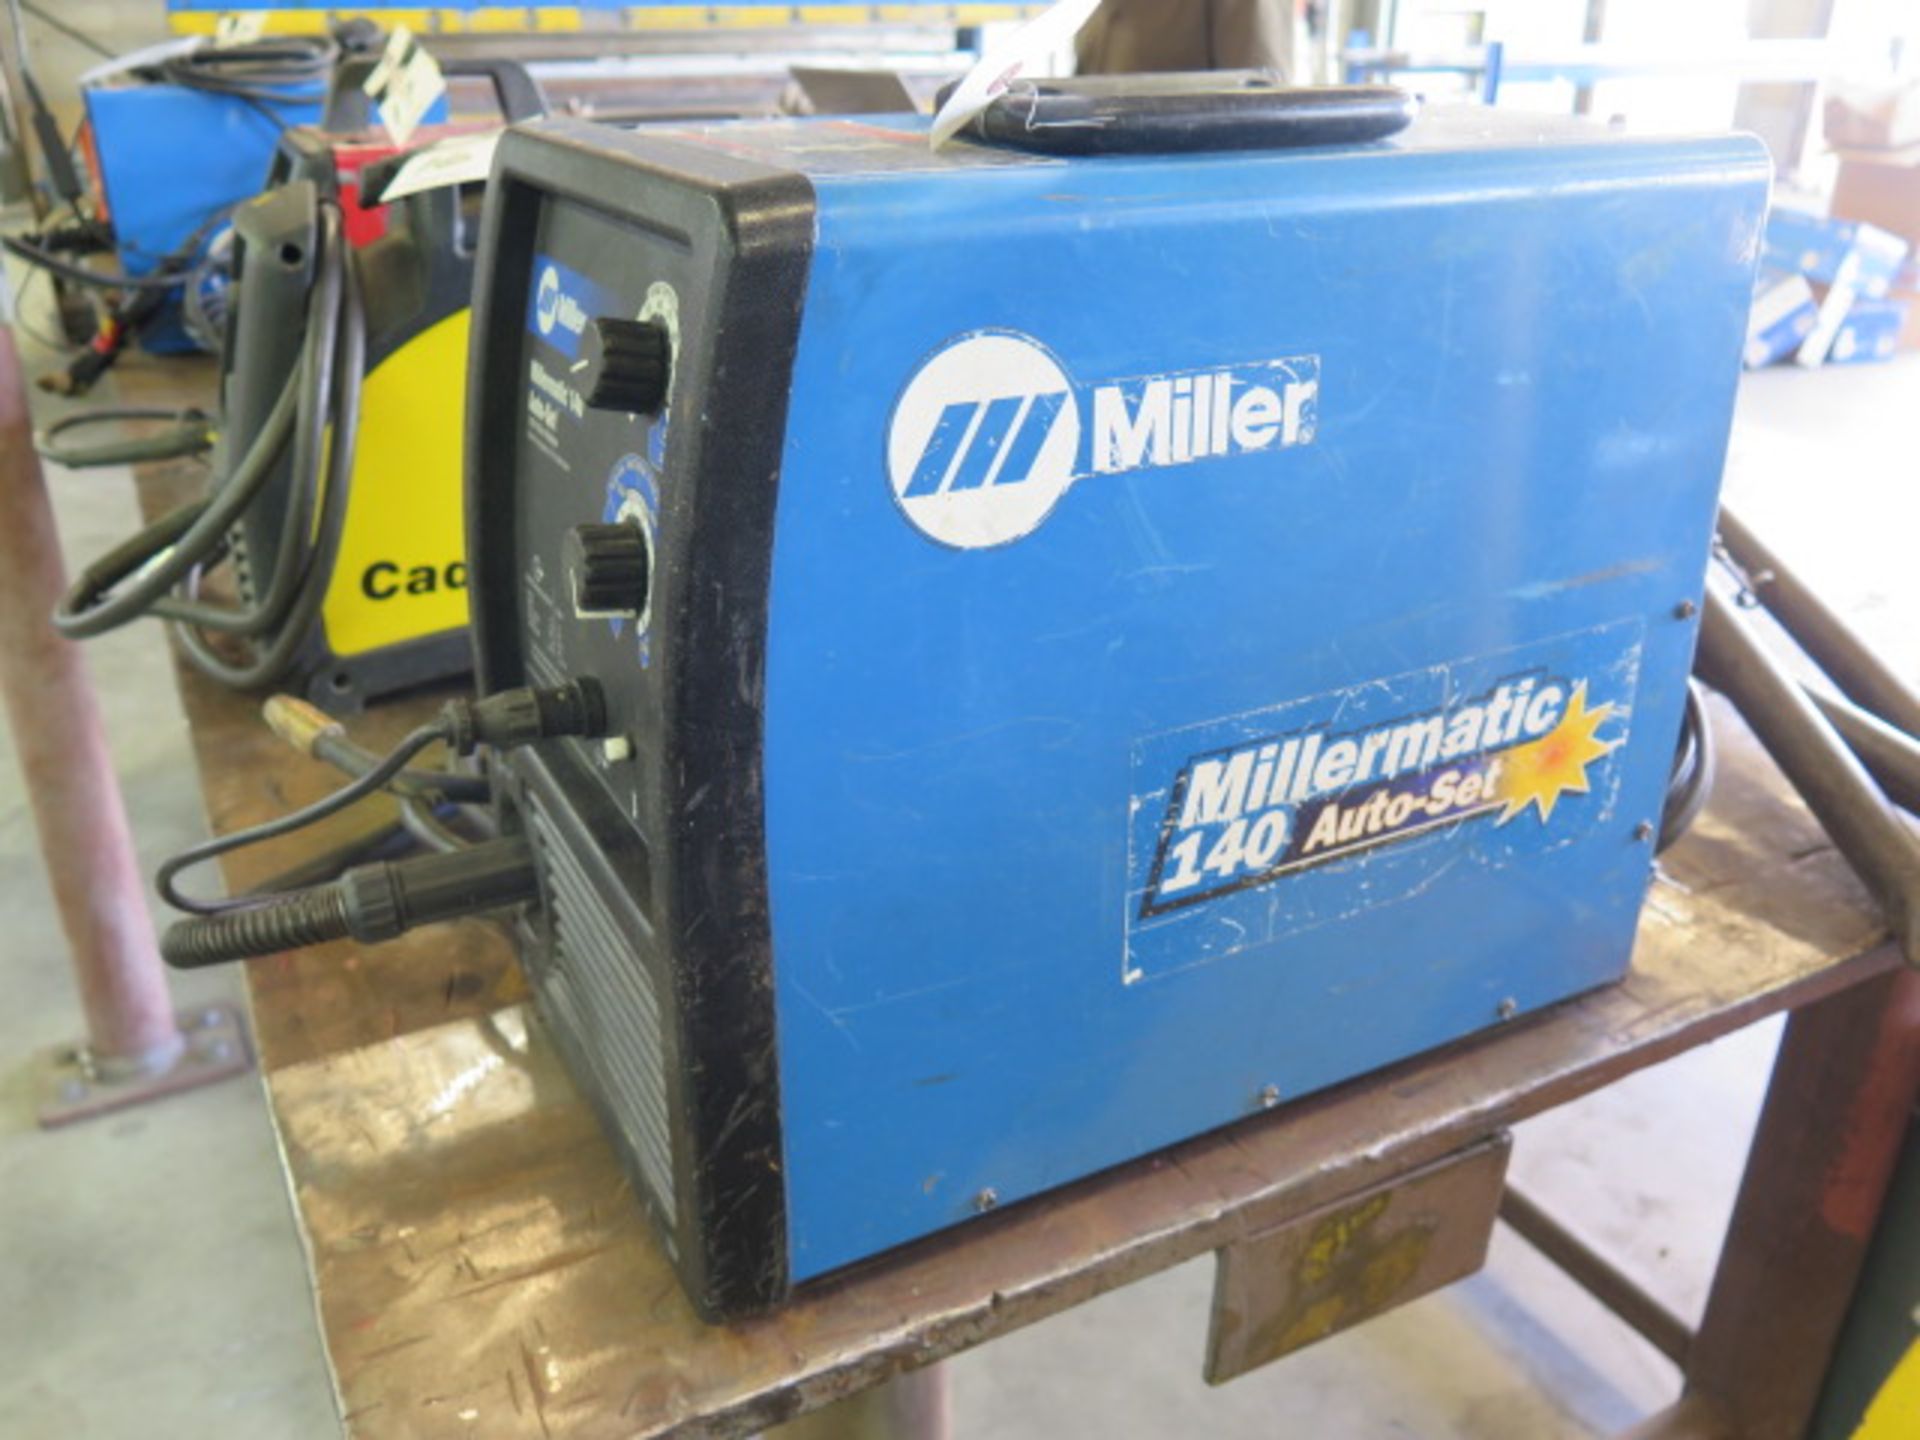 Miller Millermatic 140 Auto-Set 120 Volt Arc Welding Power Source s/n MC180735N - Image 2 of 5